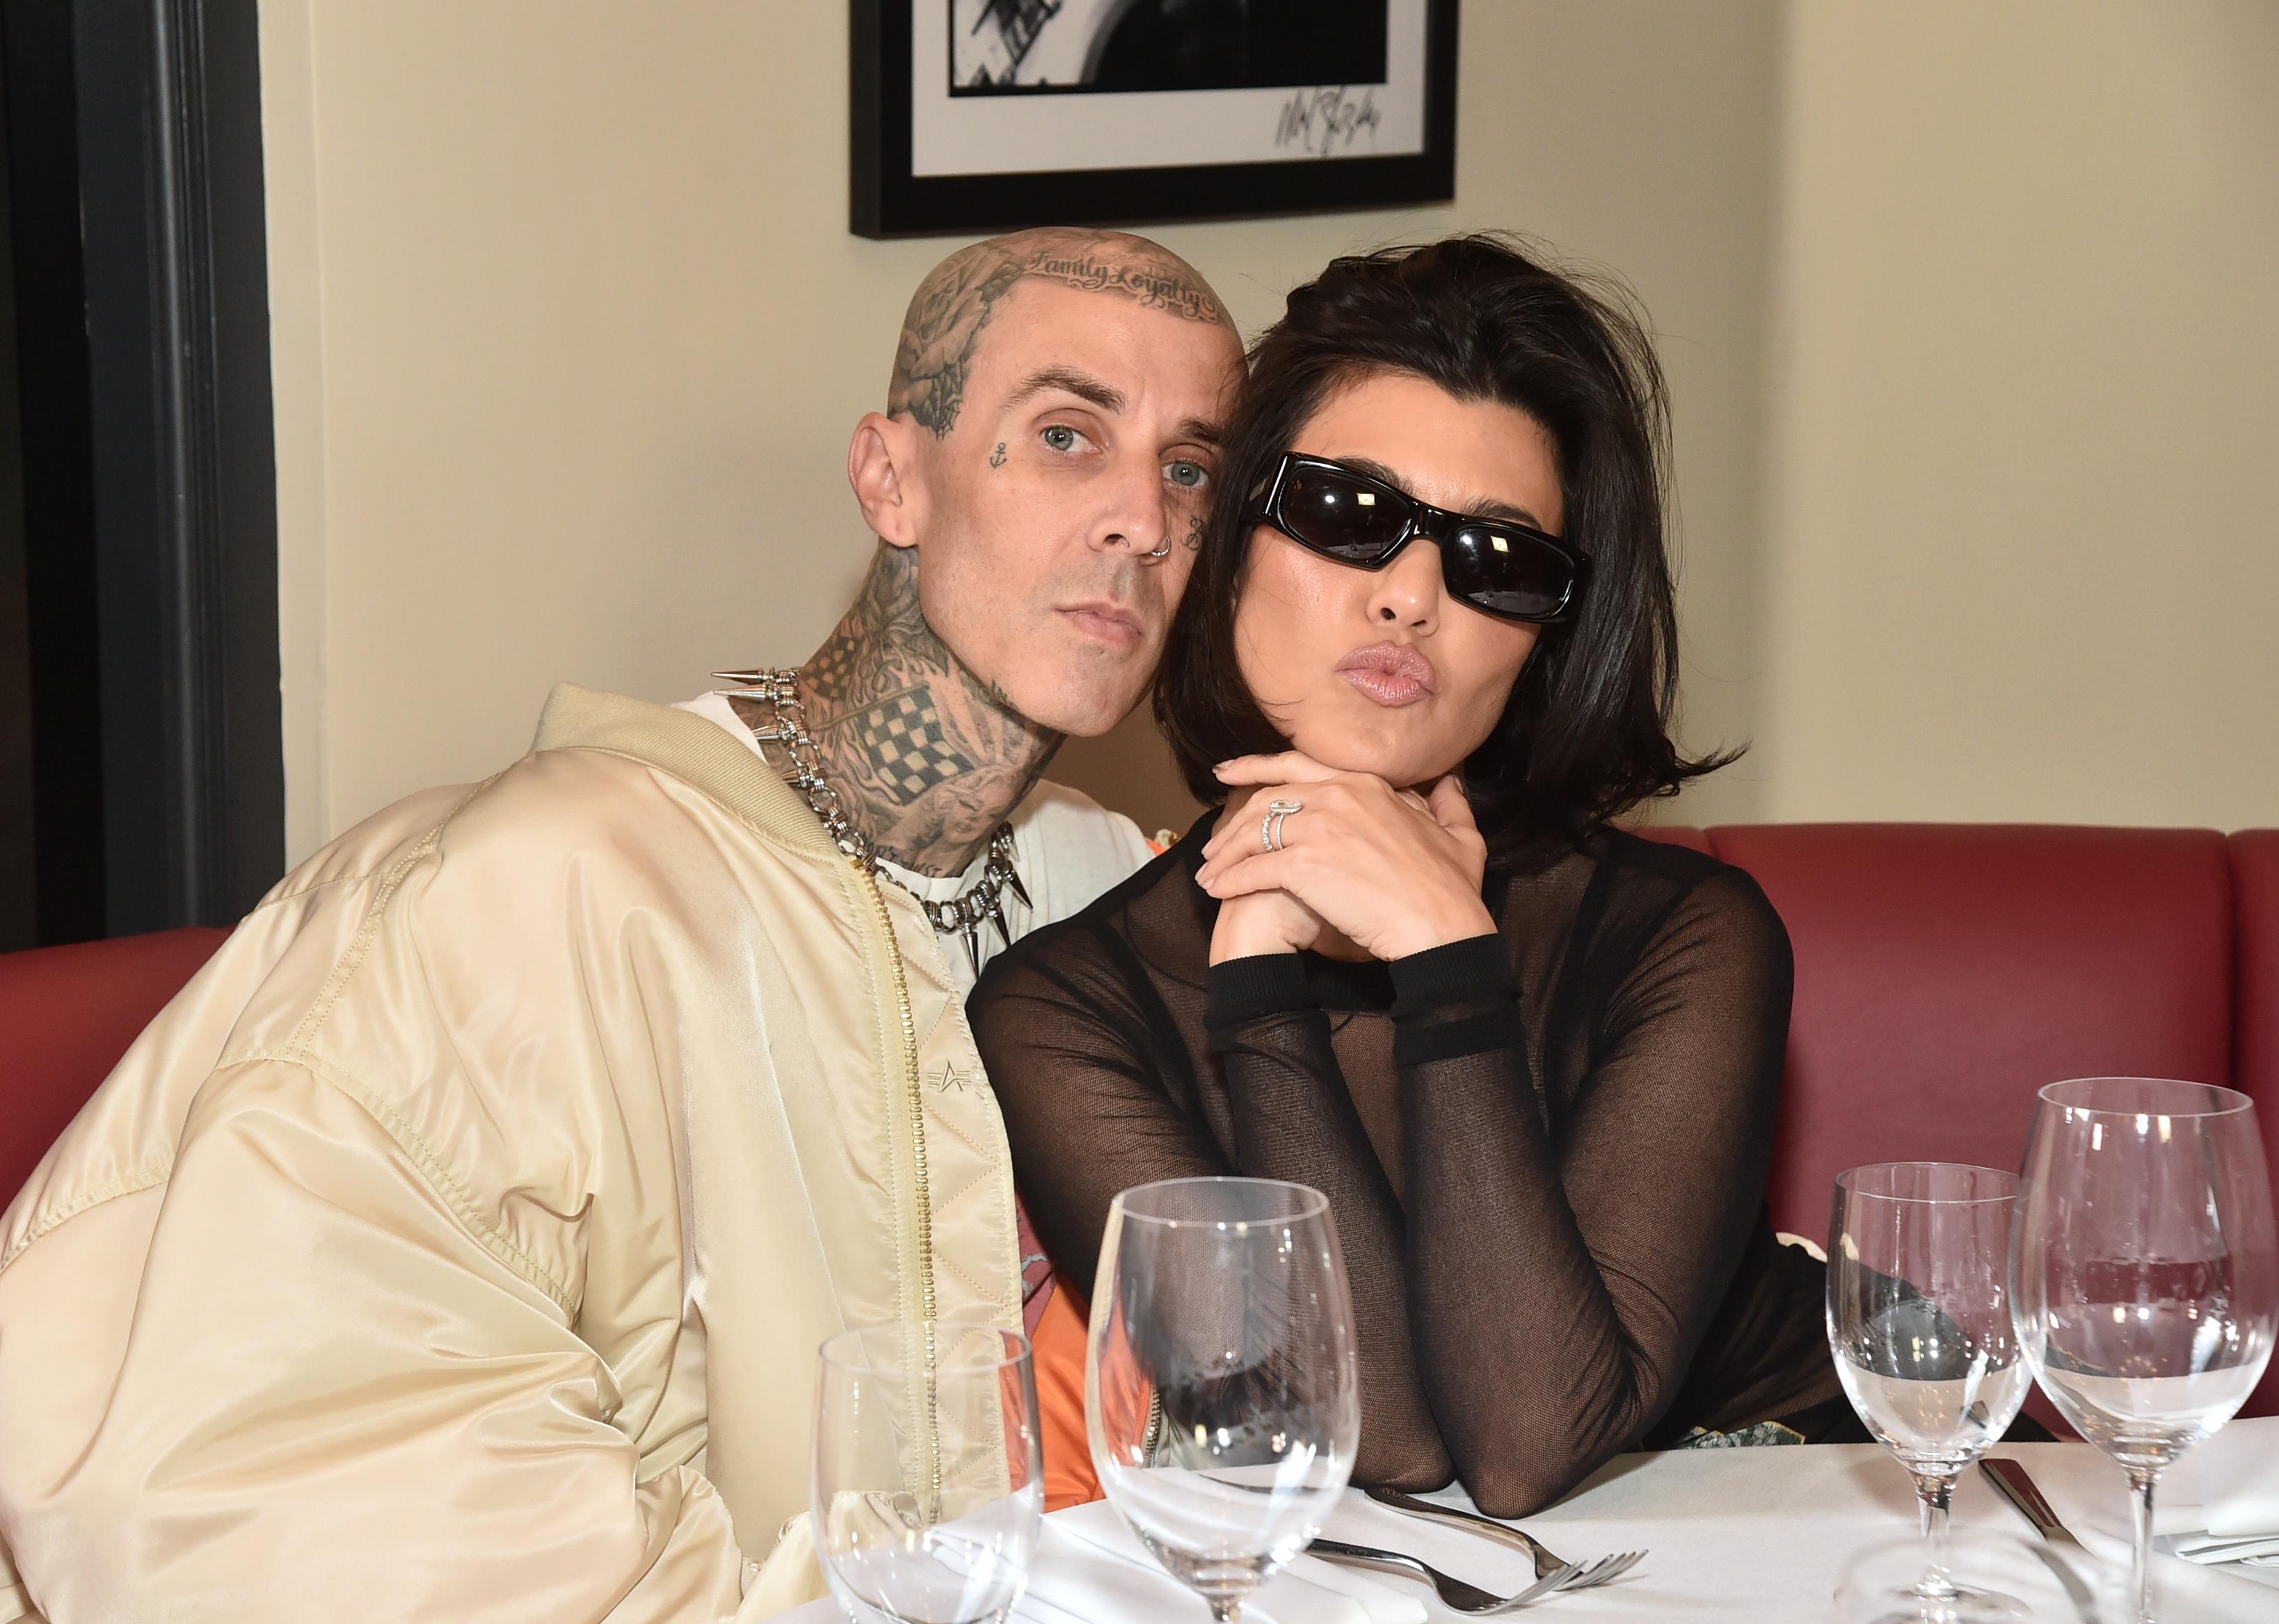 Kourtney Kardashian and Travis Barker sitting at a restaurant together.